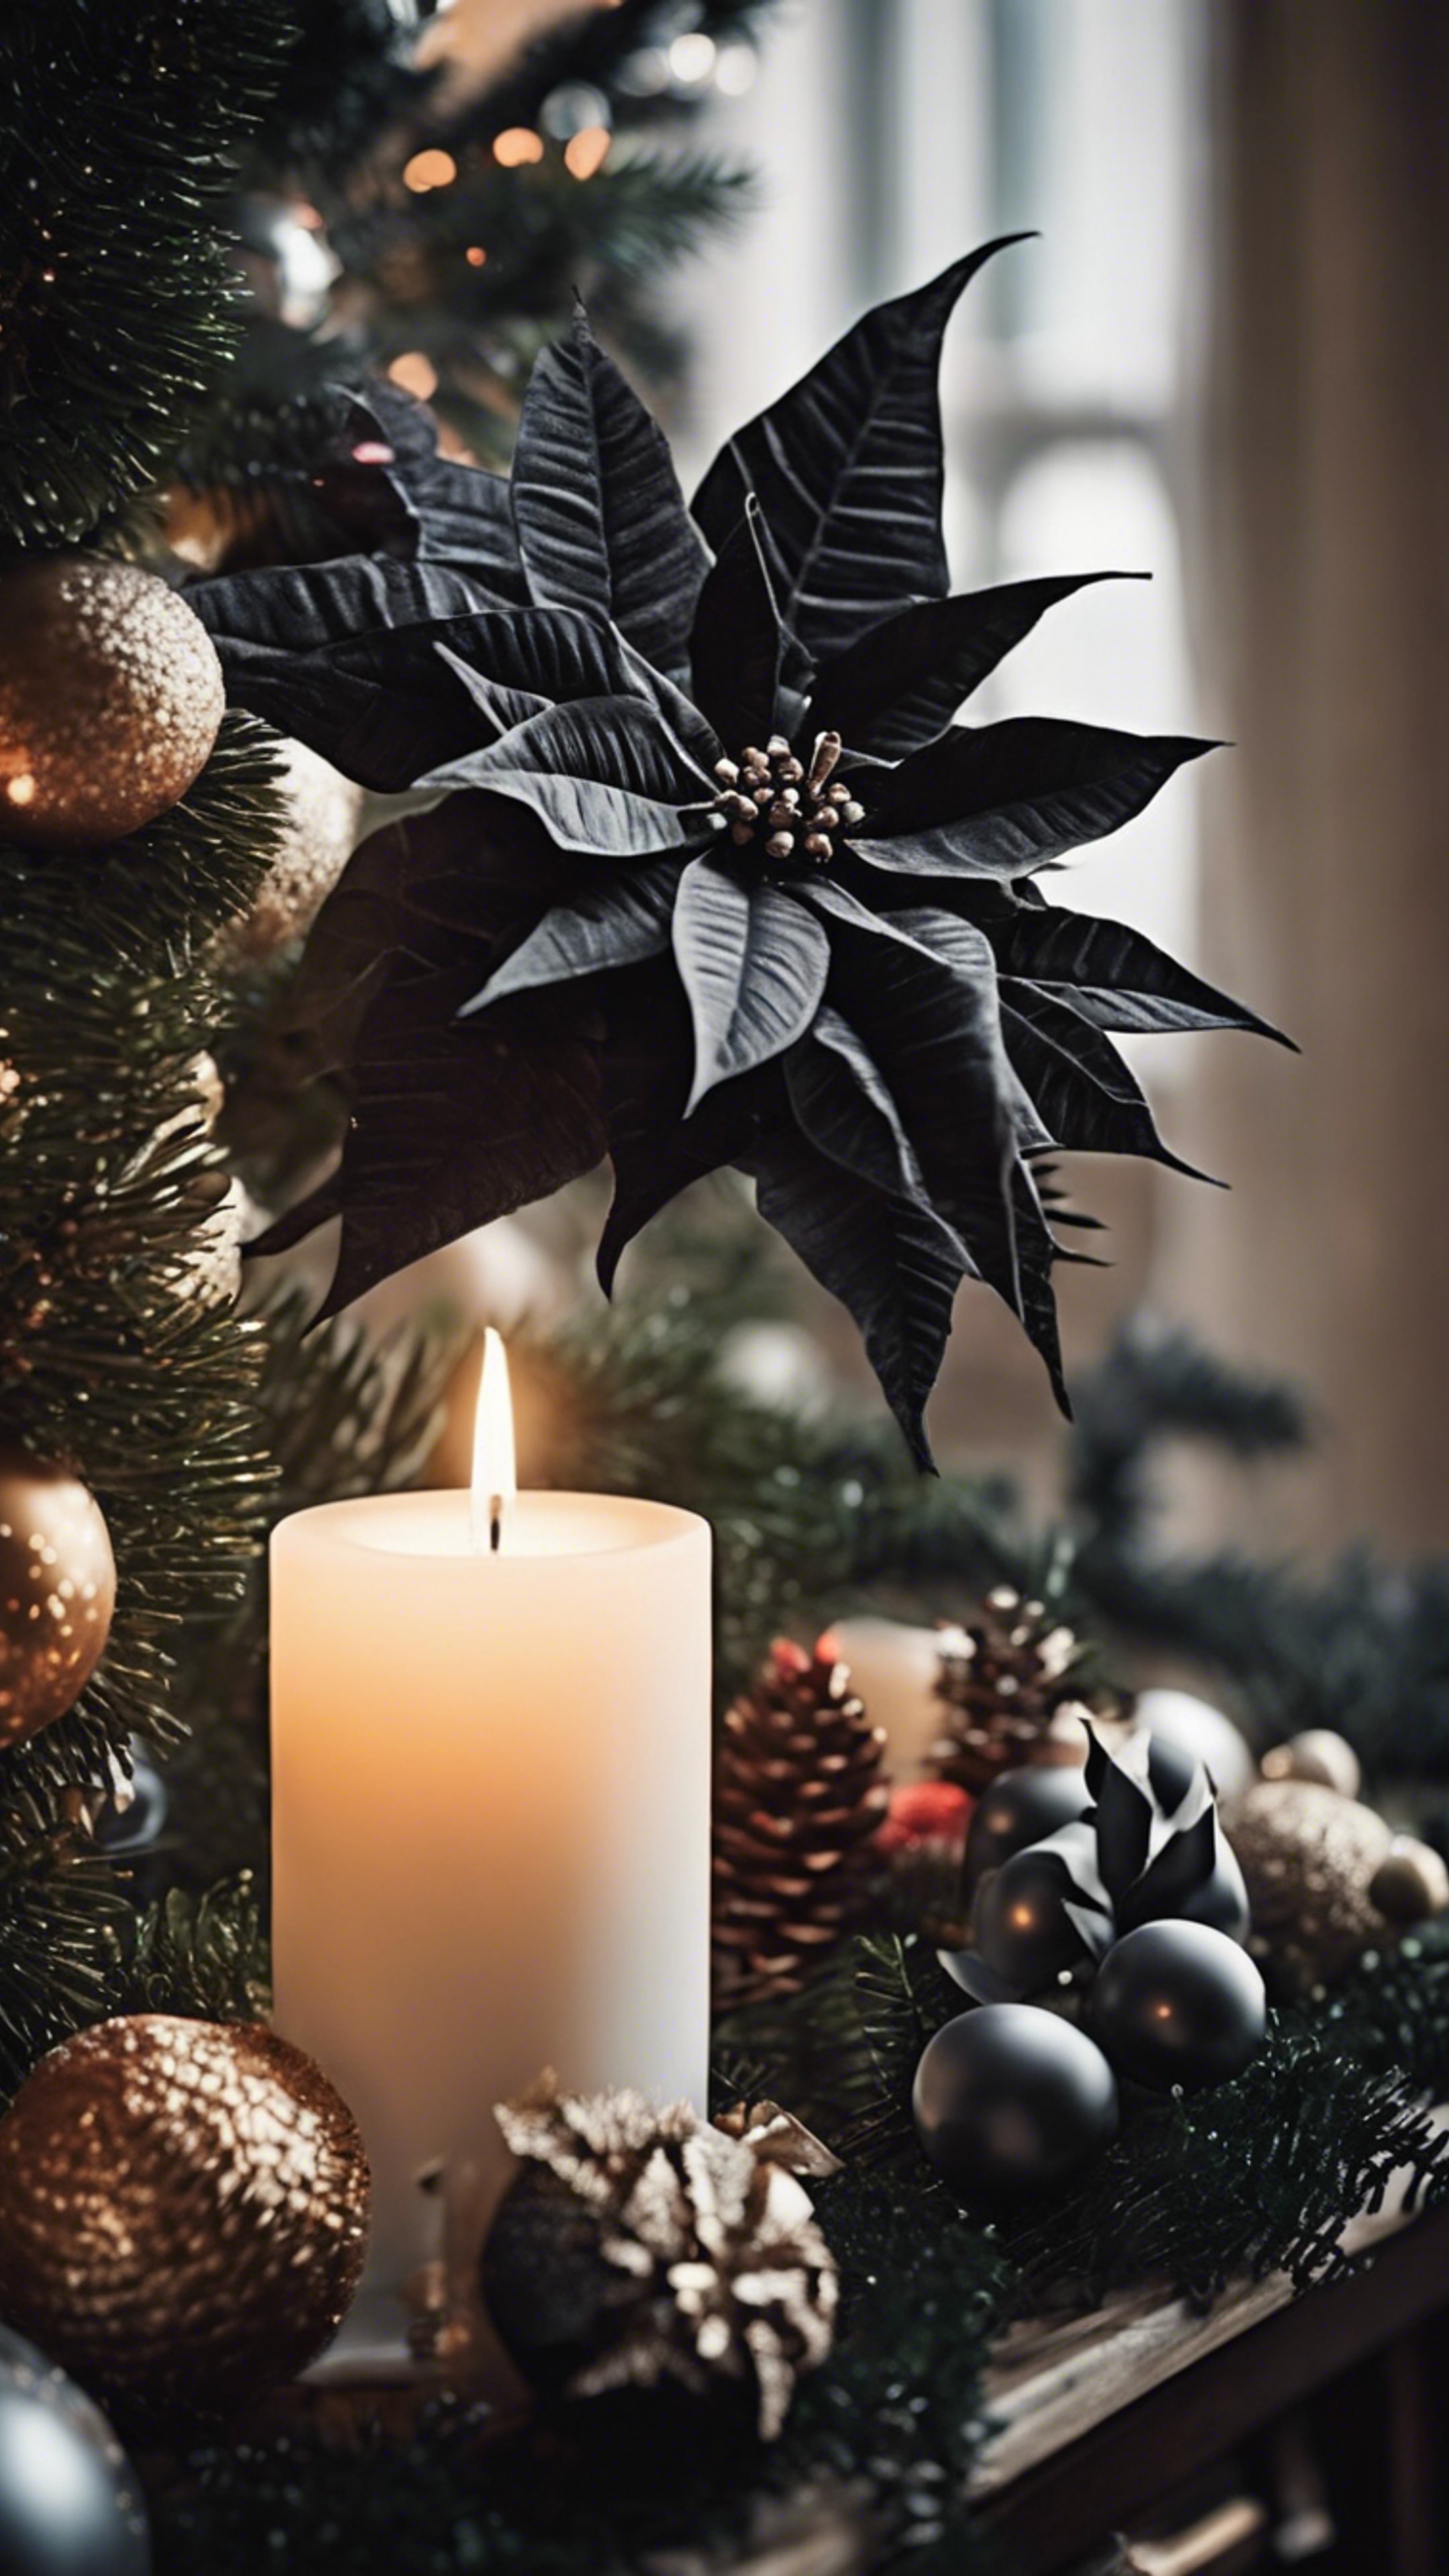 Festive arrangement of black poinsettia, adding a gothic charm to the Christmas decor.壁紙[715e9bec122344a091fc]